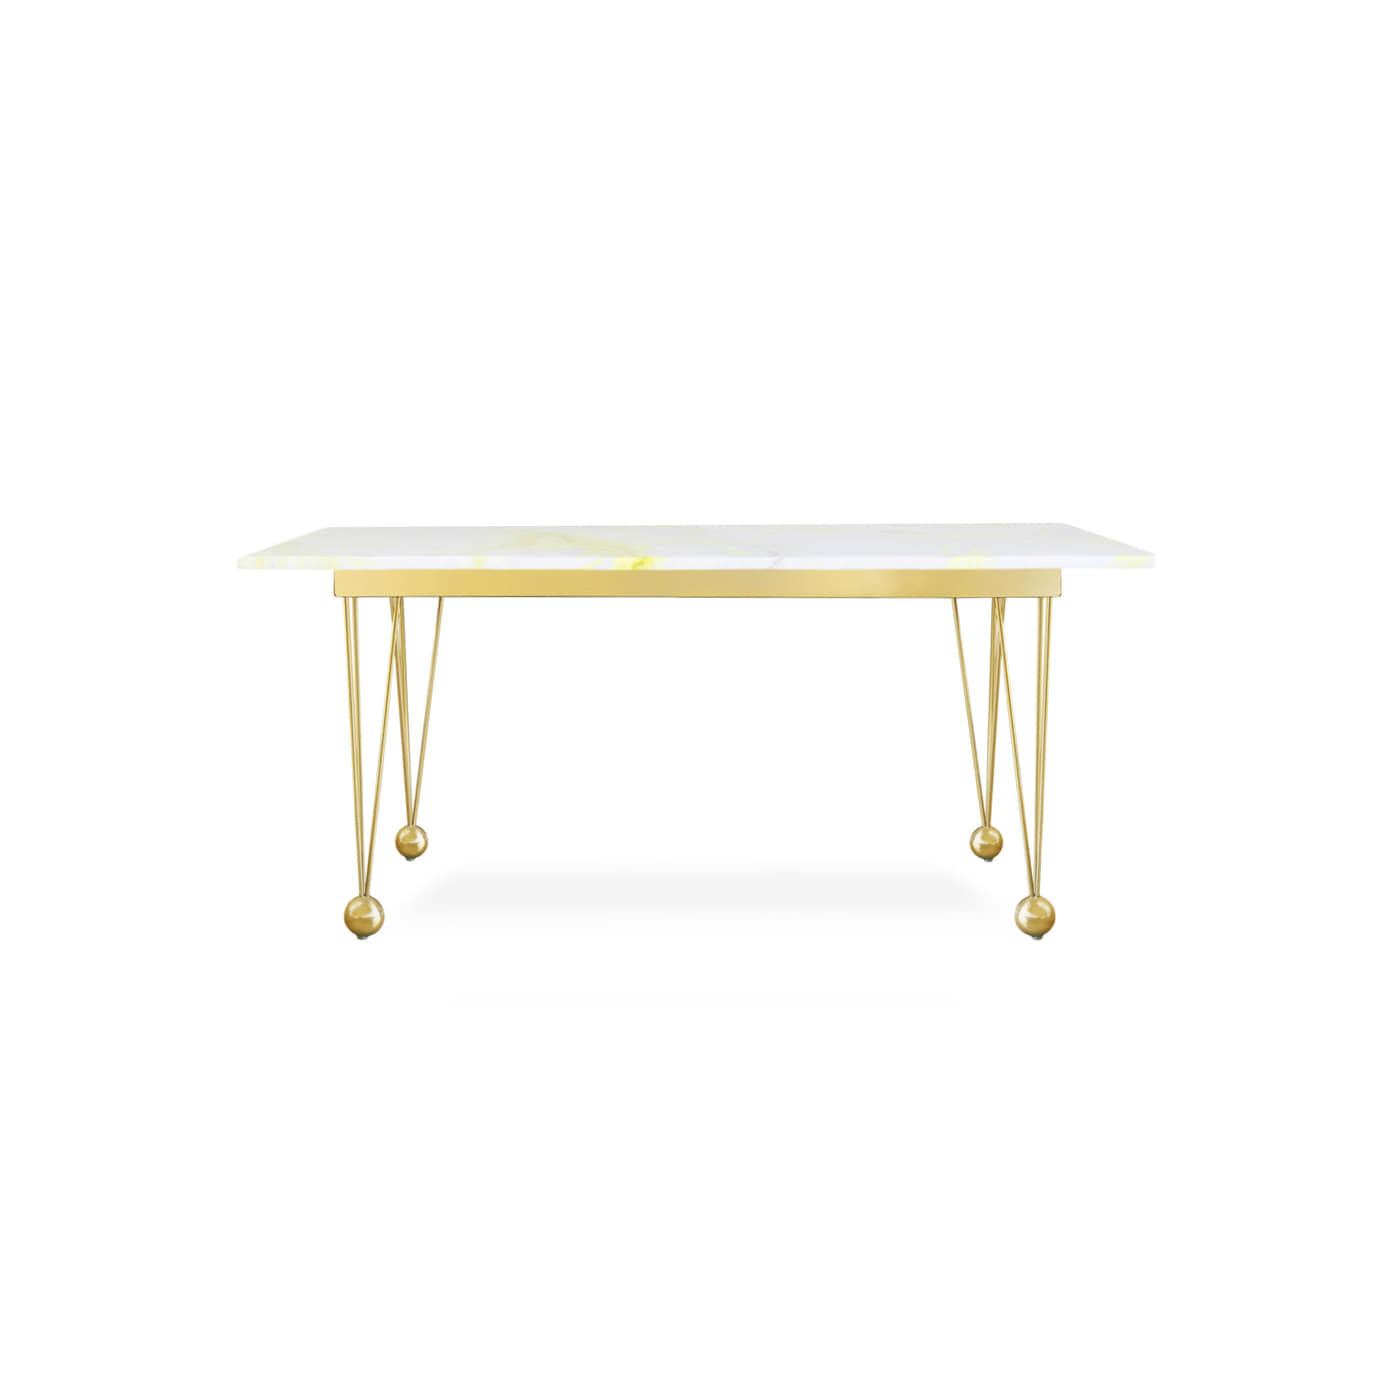 LIAM GHIM DESIGNER DINING TABLE - GOLD